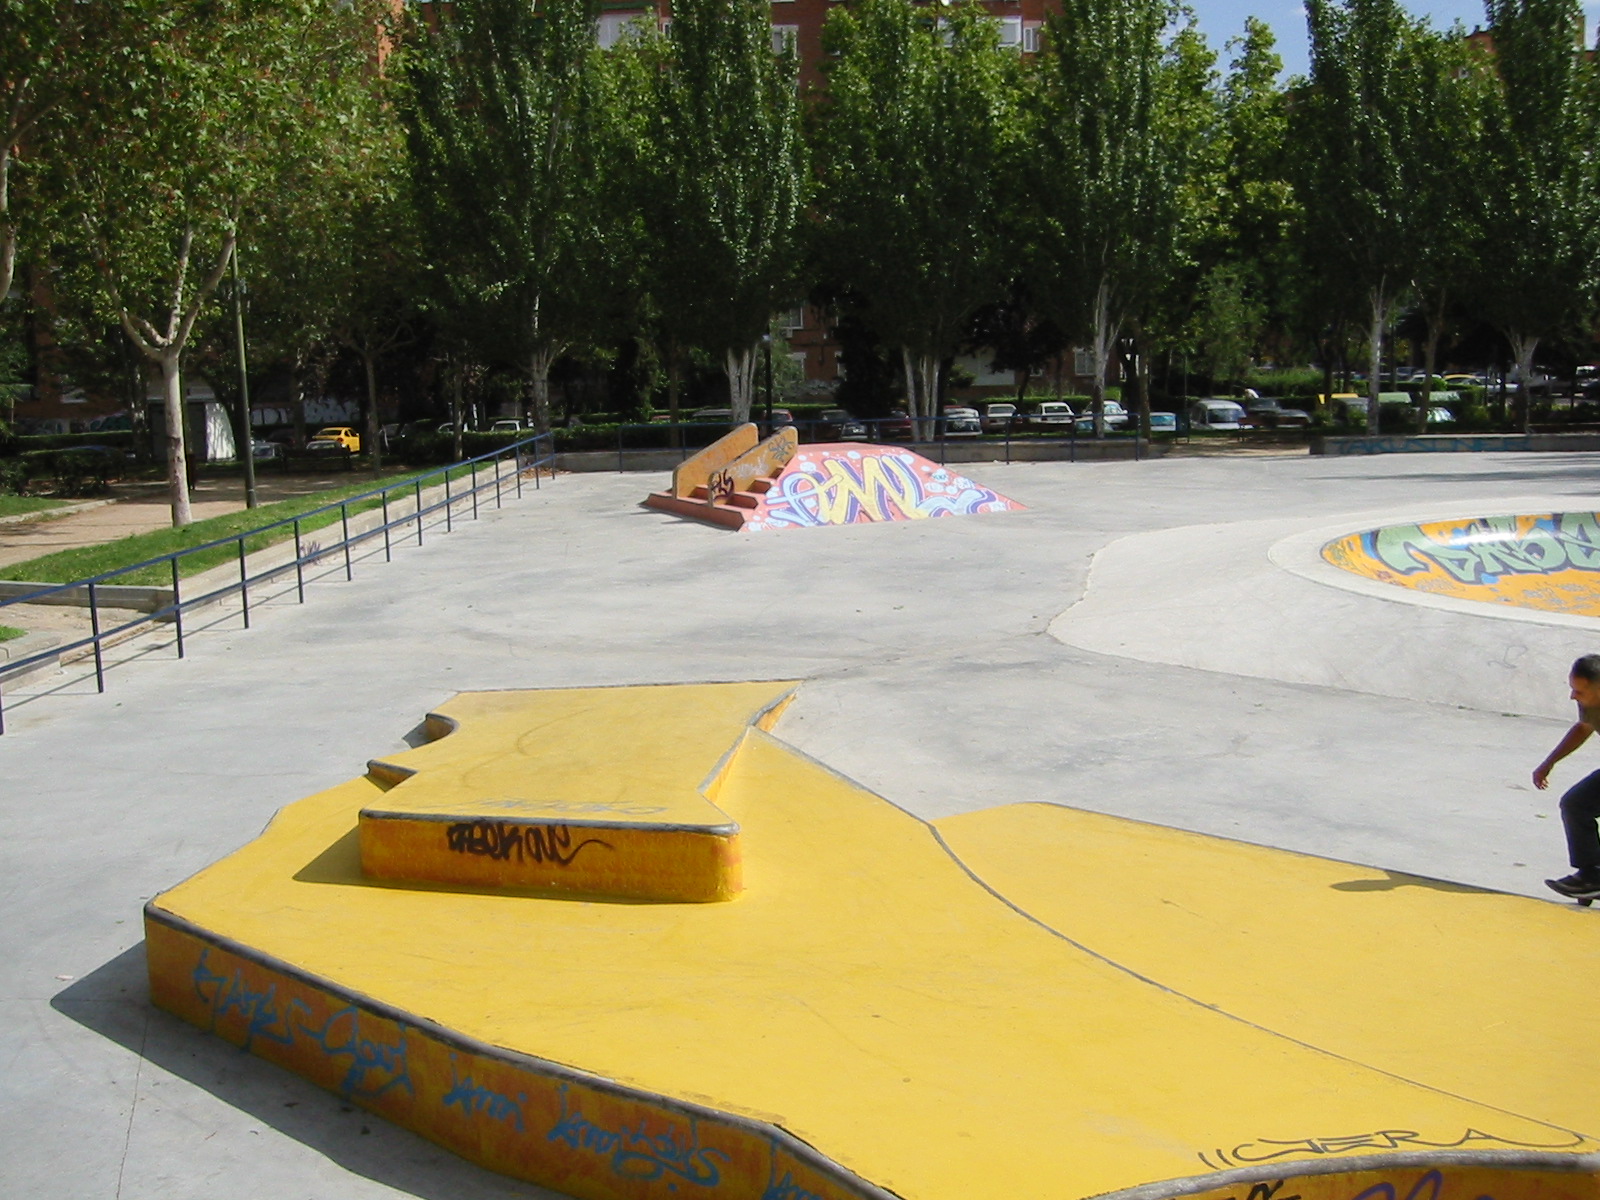 skatepark mostoles